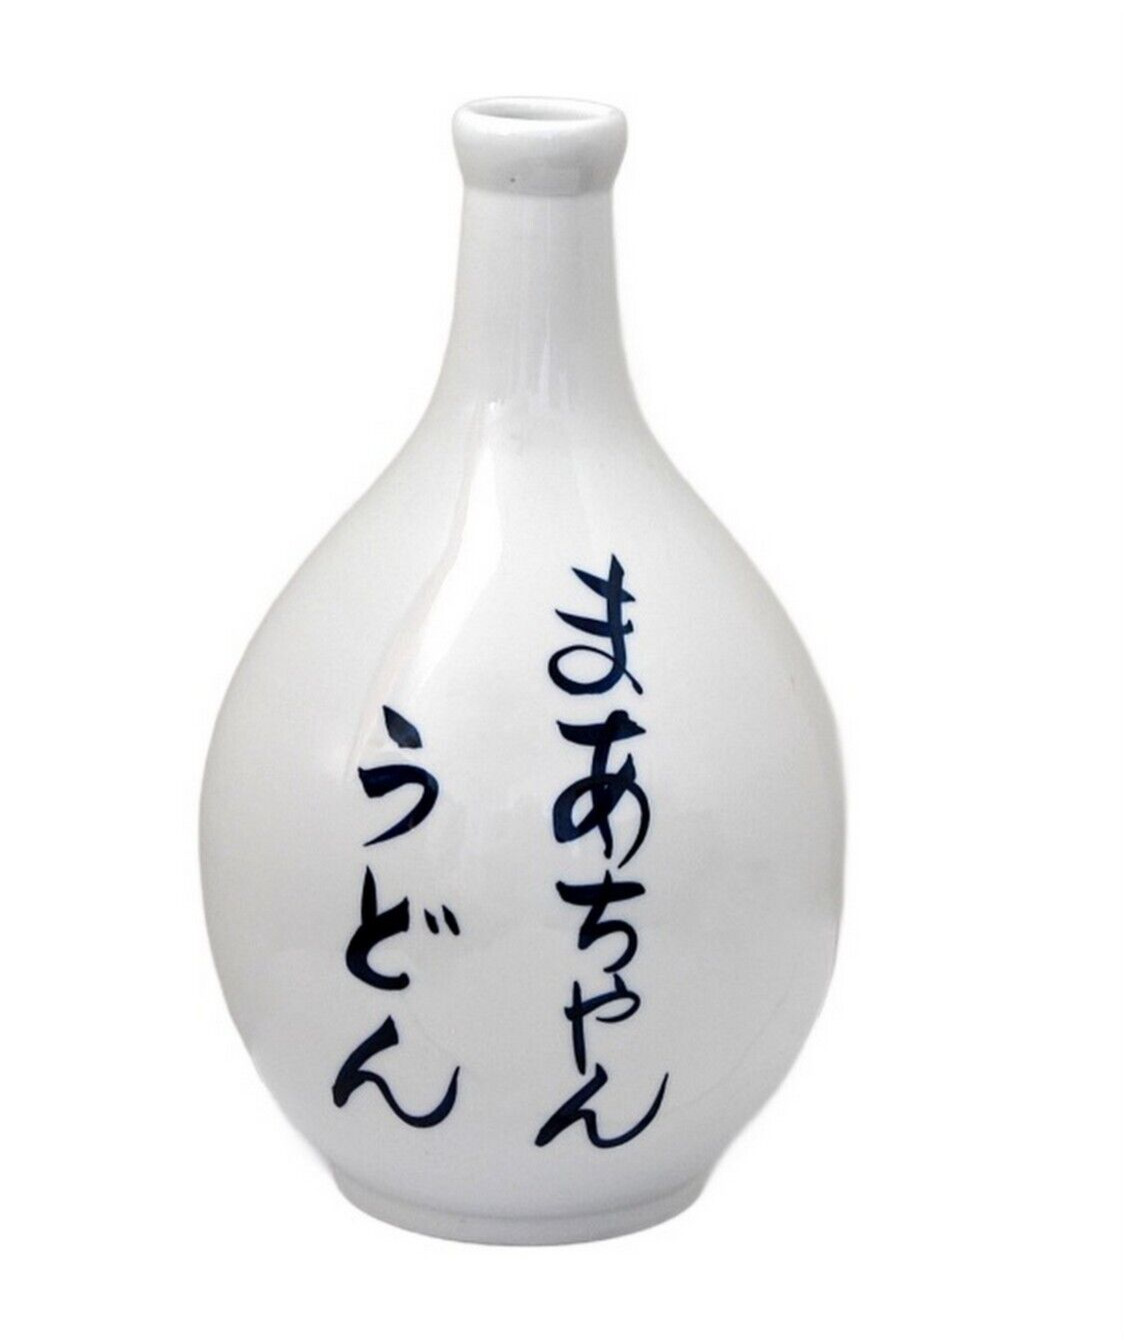 Japanese Sake Bottle Vase Blue White Inscribed and Marked